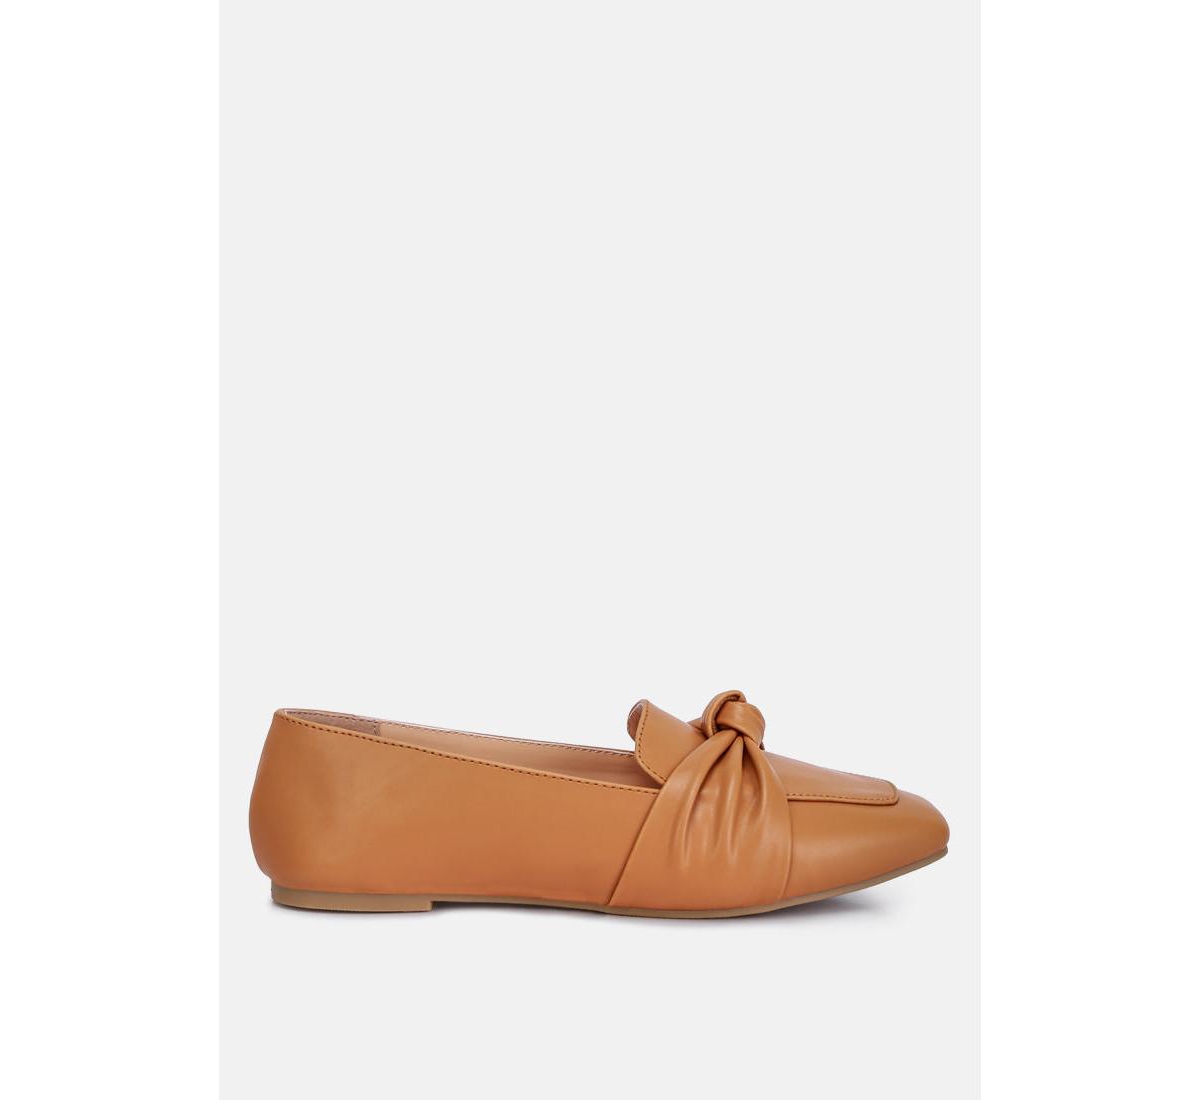 denali faux leather flat loafers - Tan